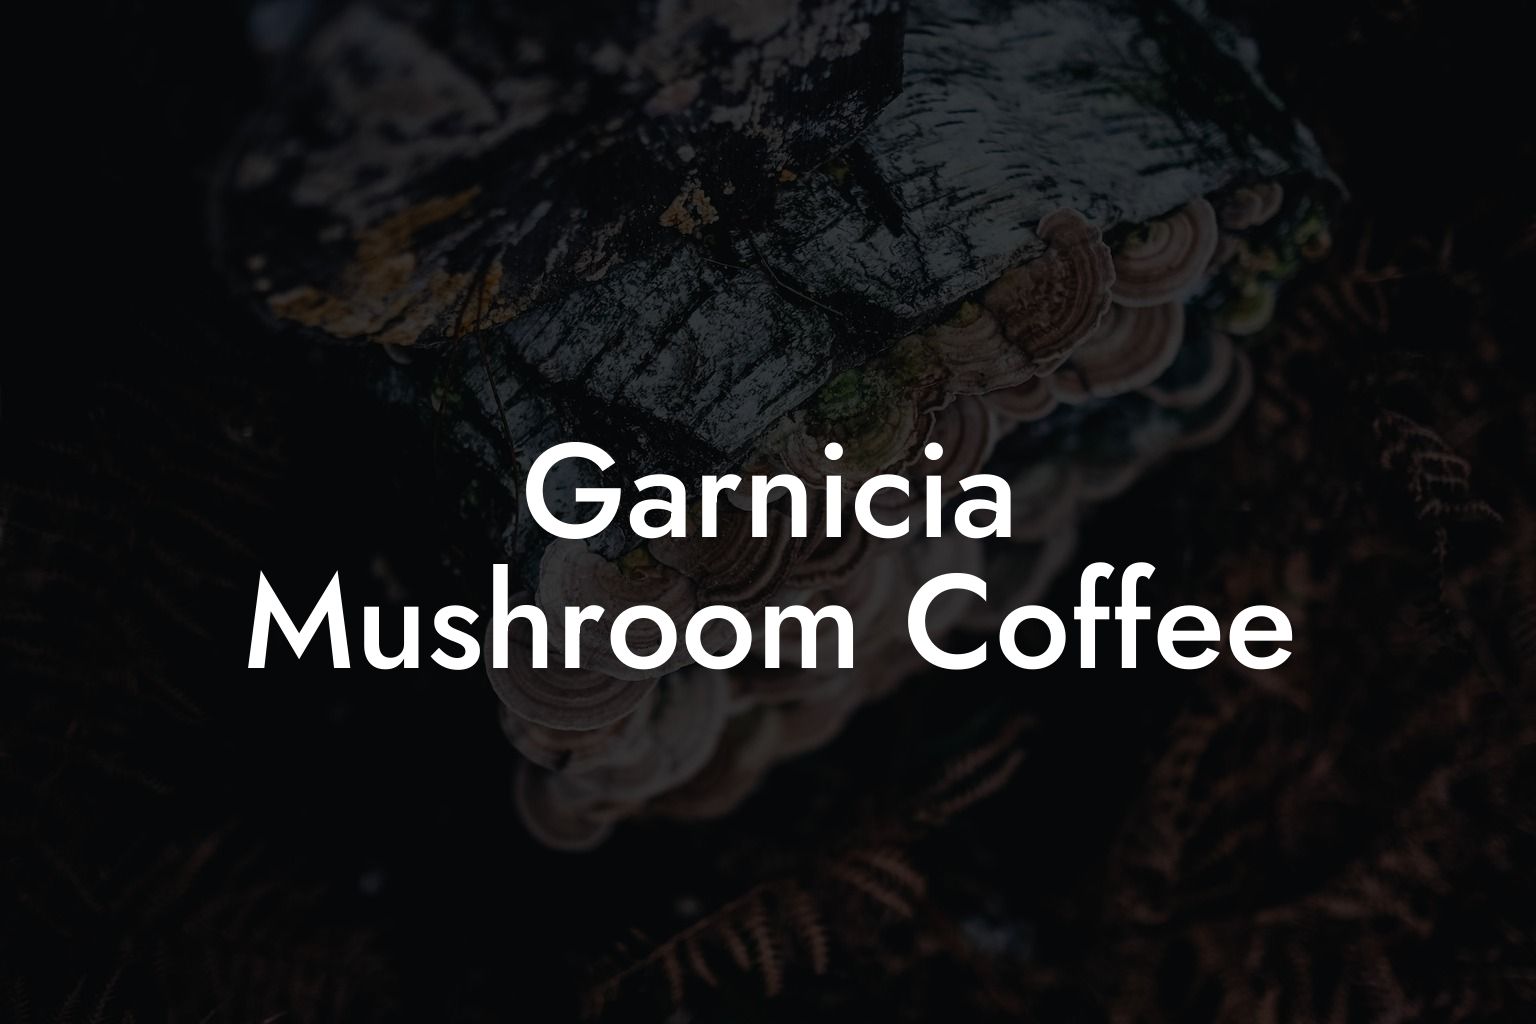 Garnicia Mushroom Coffee